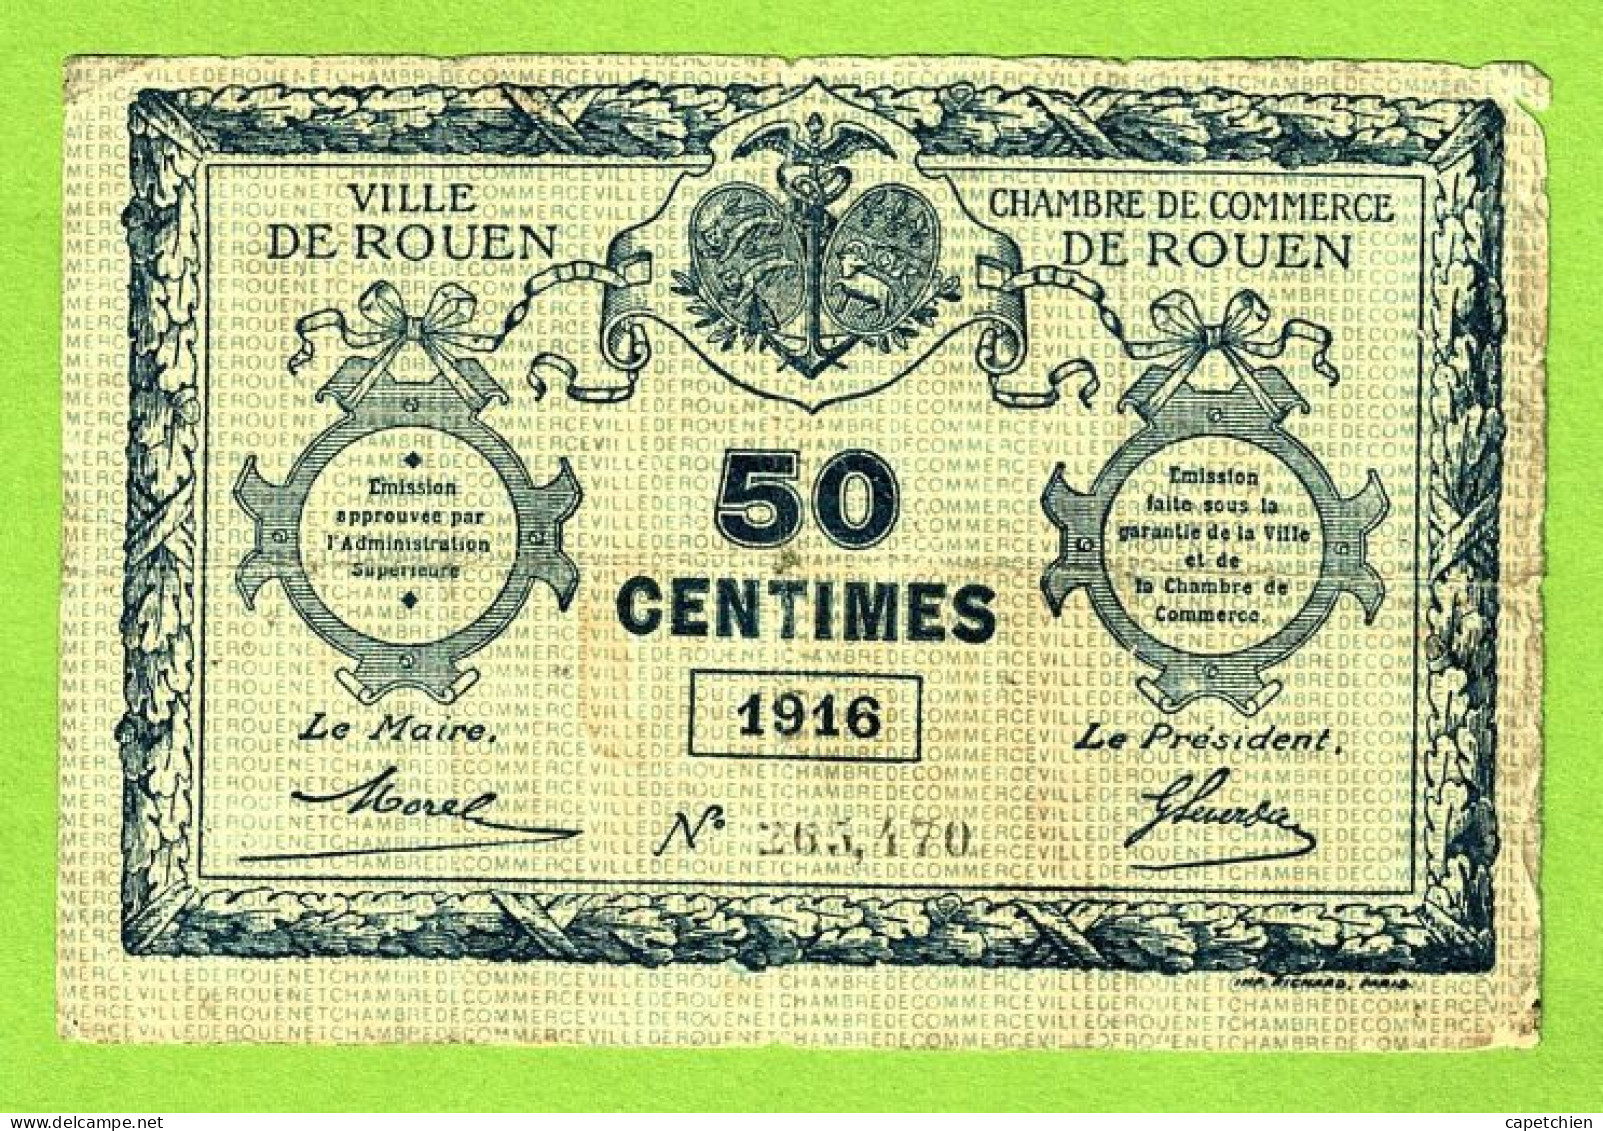 FRANCE / VILLE & CHAMBRE De COMMERCE De ROUEN / 50 CENTIMES /  1916  / N° 265470 - Camera Di Commercio